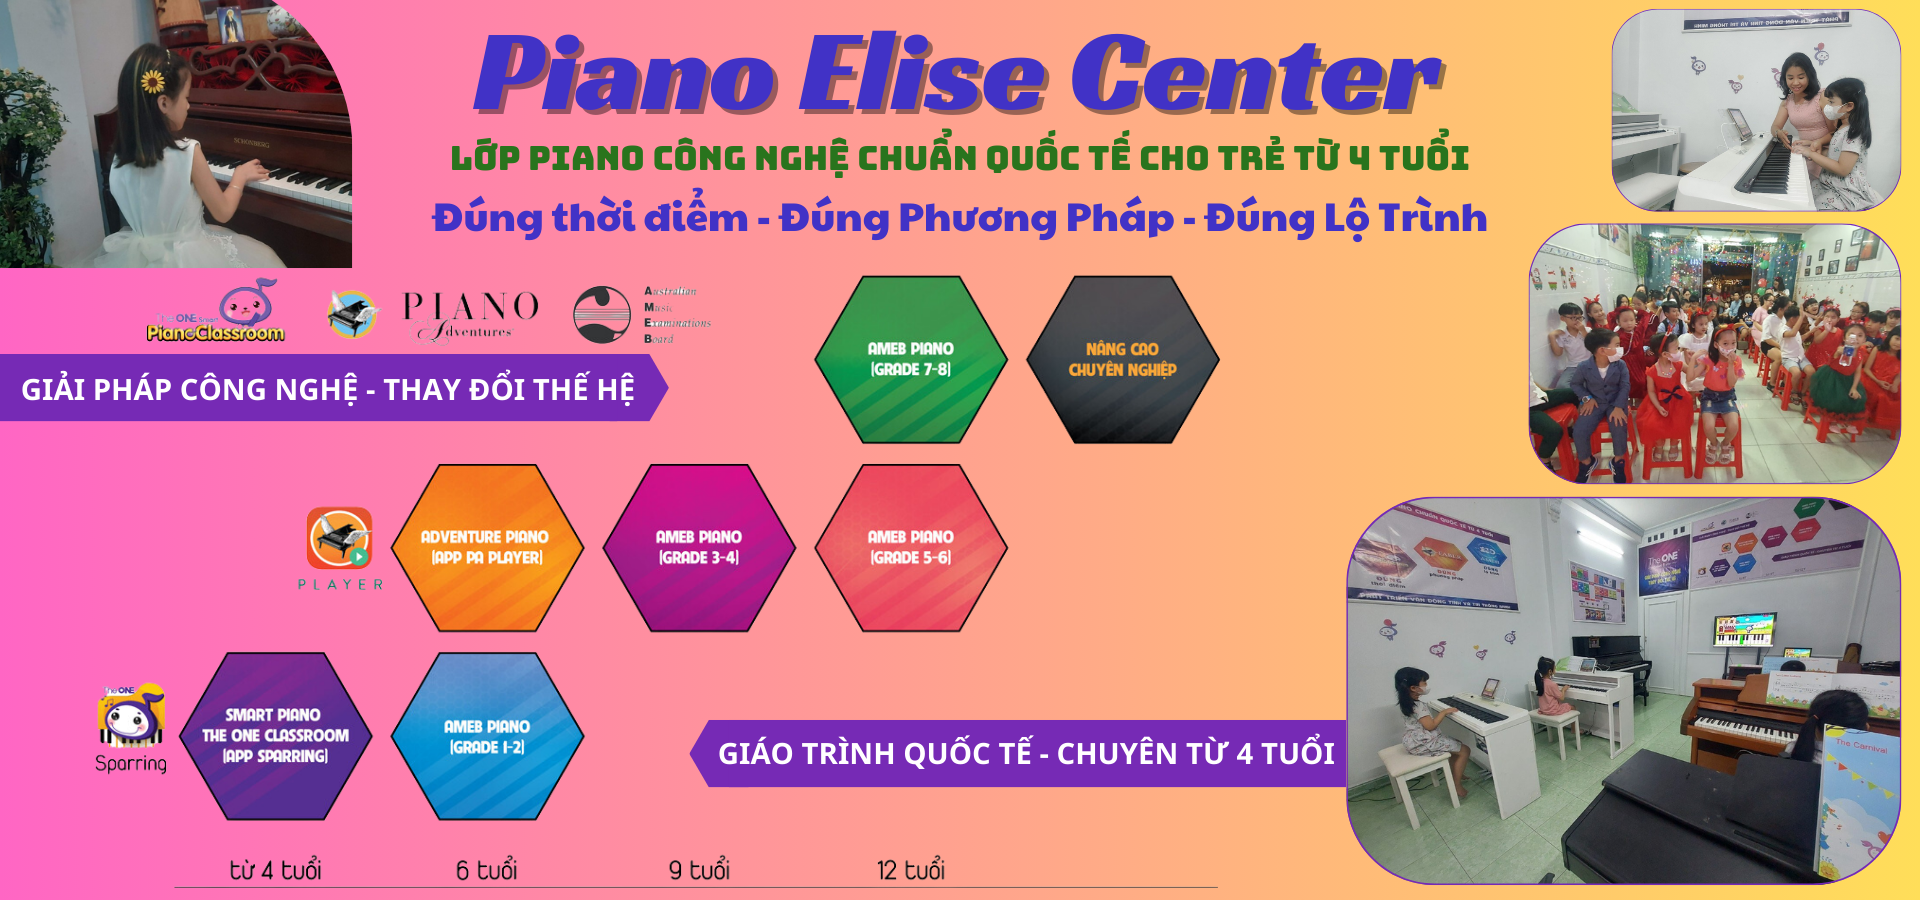 PIANO ELISE CENTER 1920 x 900 px 1